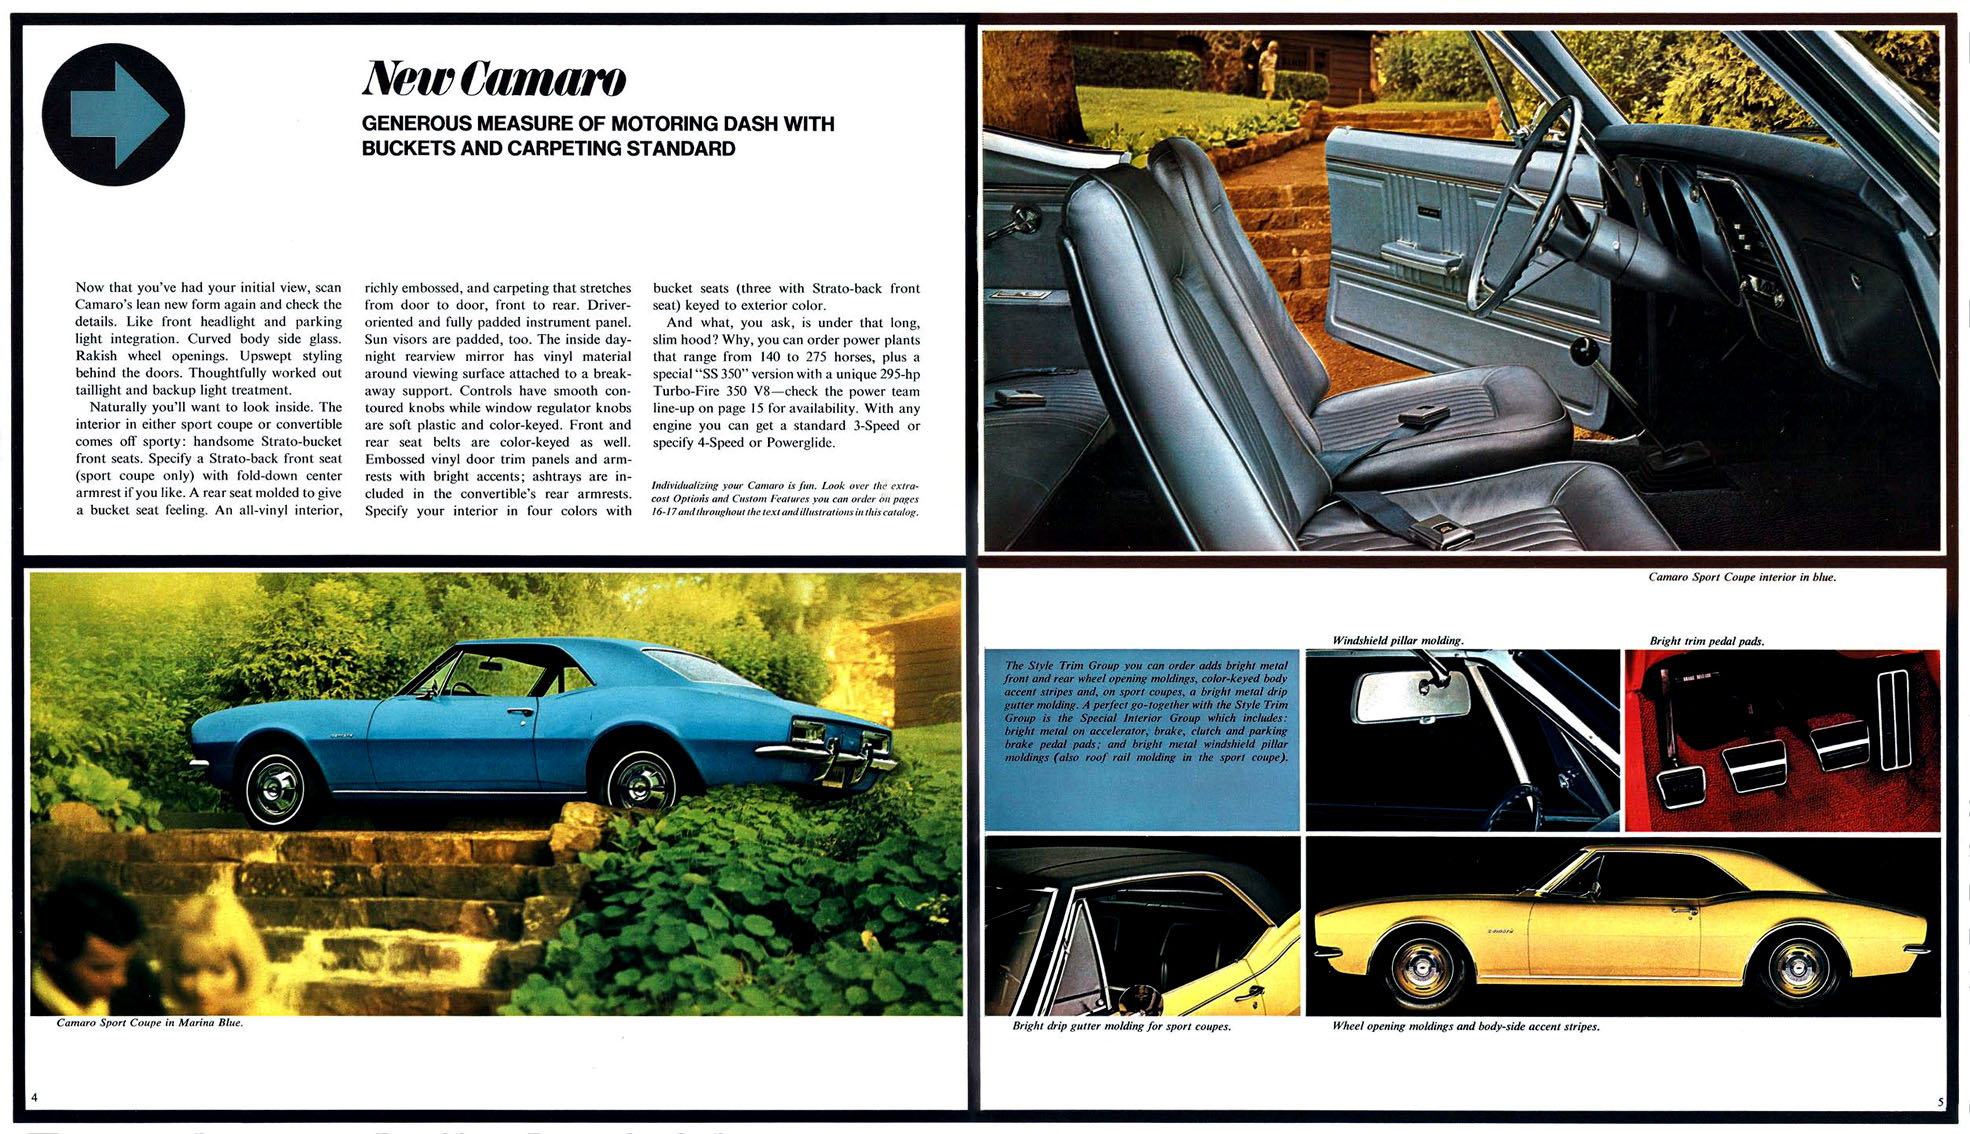 New Camaro By Chevrolet (1967)